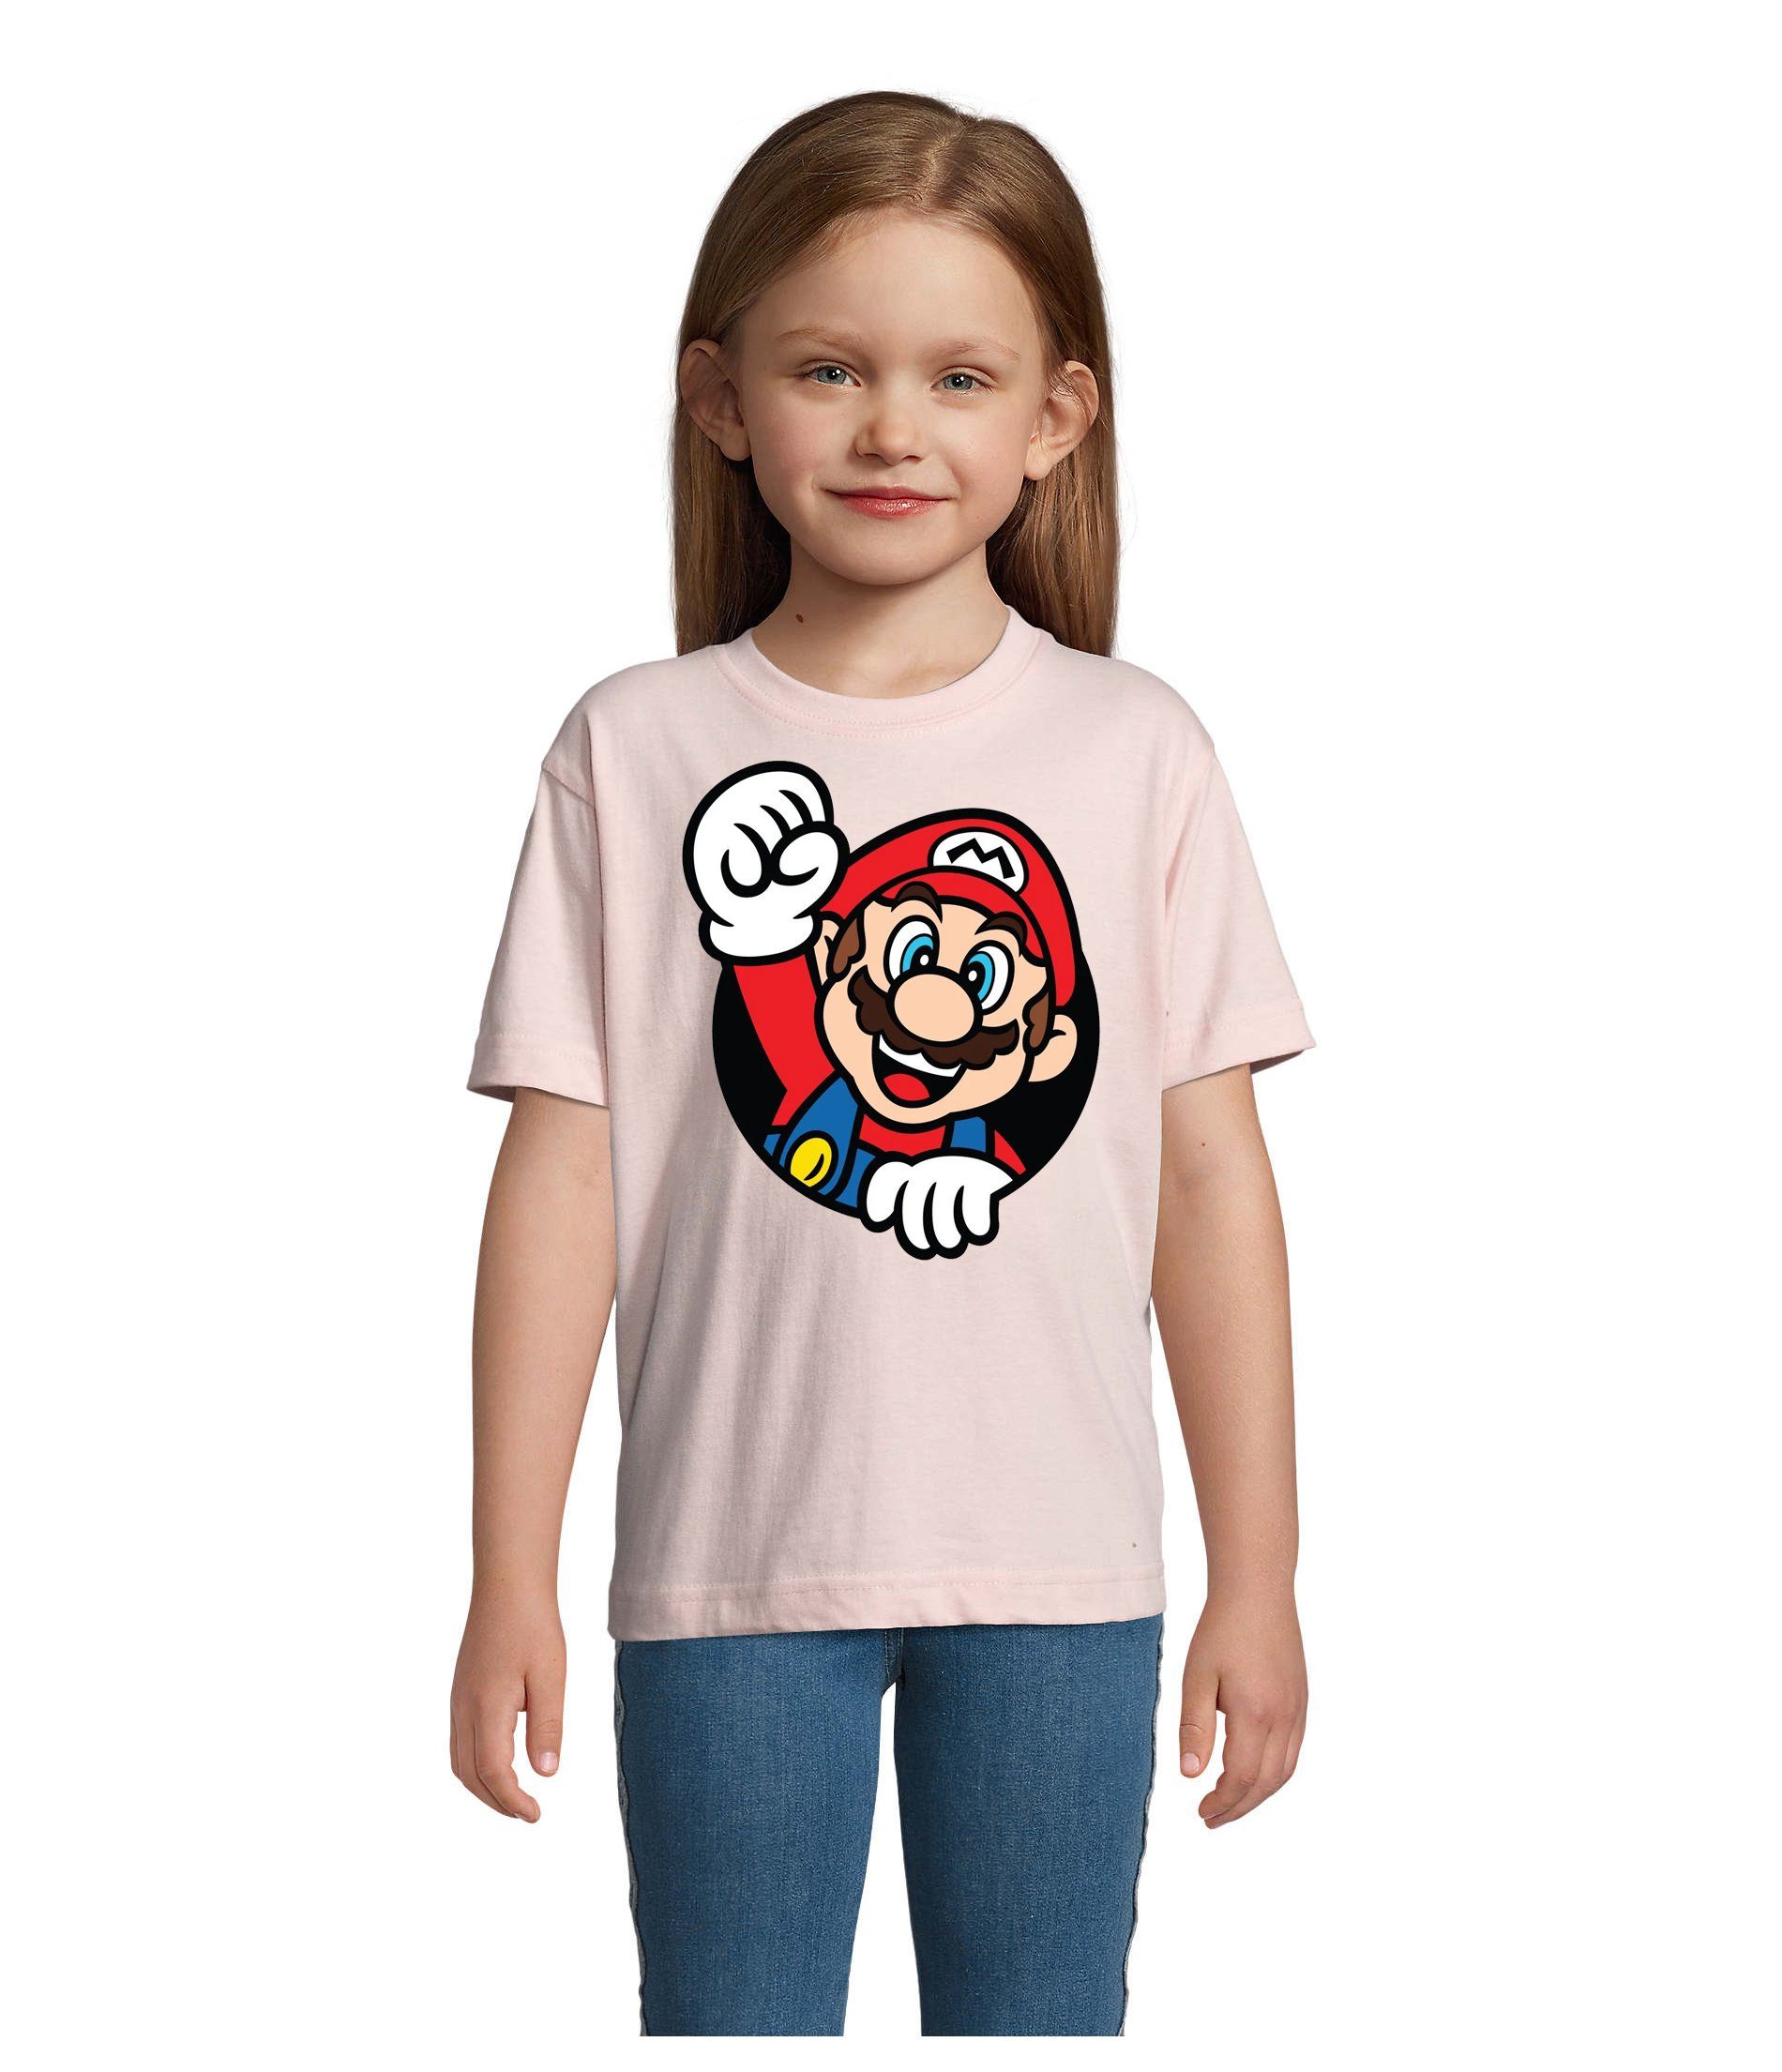 Blondie & Brownie T-Shirt Kinder Super Mario Faust Nerd Konsole Gaming Spiel Nintendo Konsole Rosa